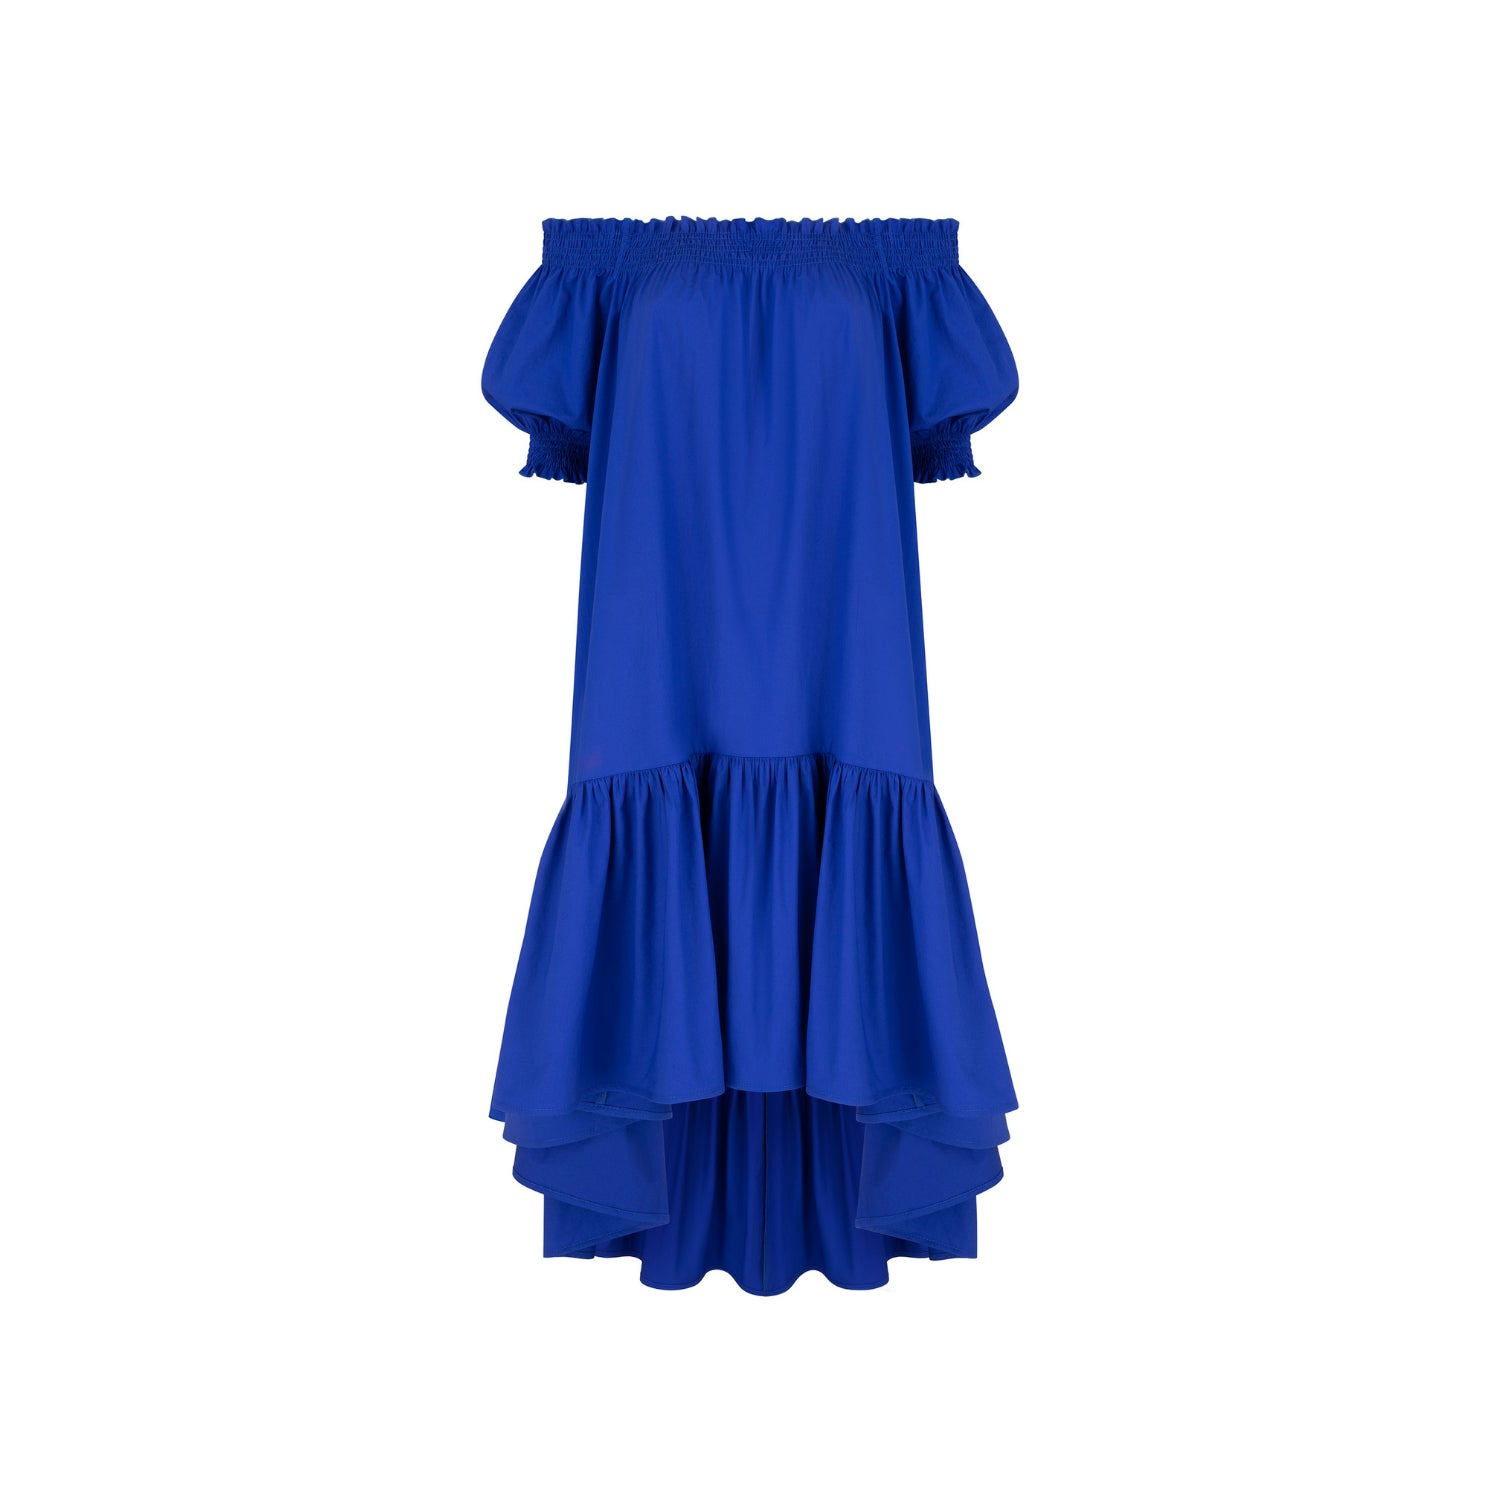 Monica Nera Women's Lori Dress - Royal Blue